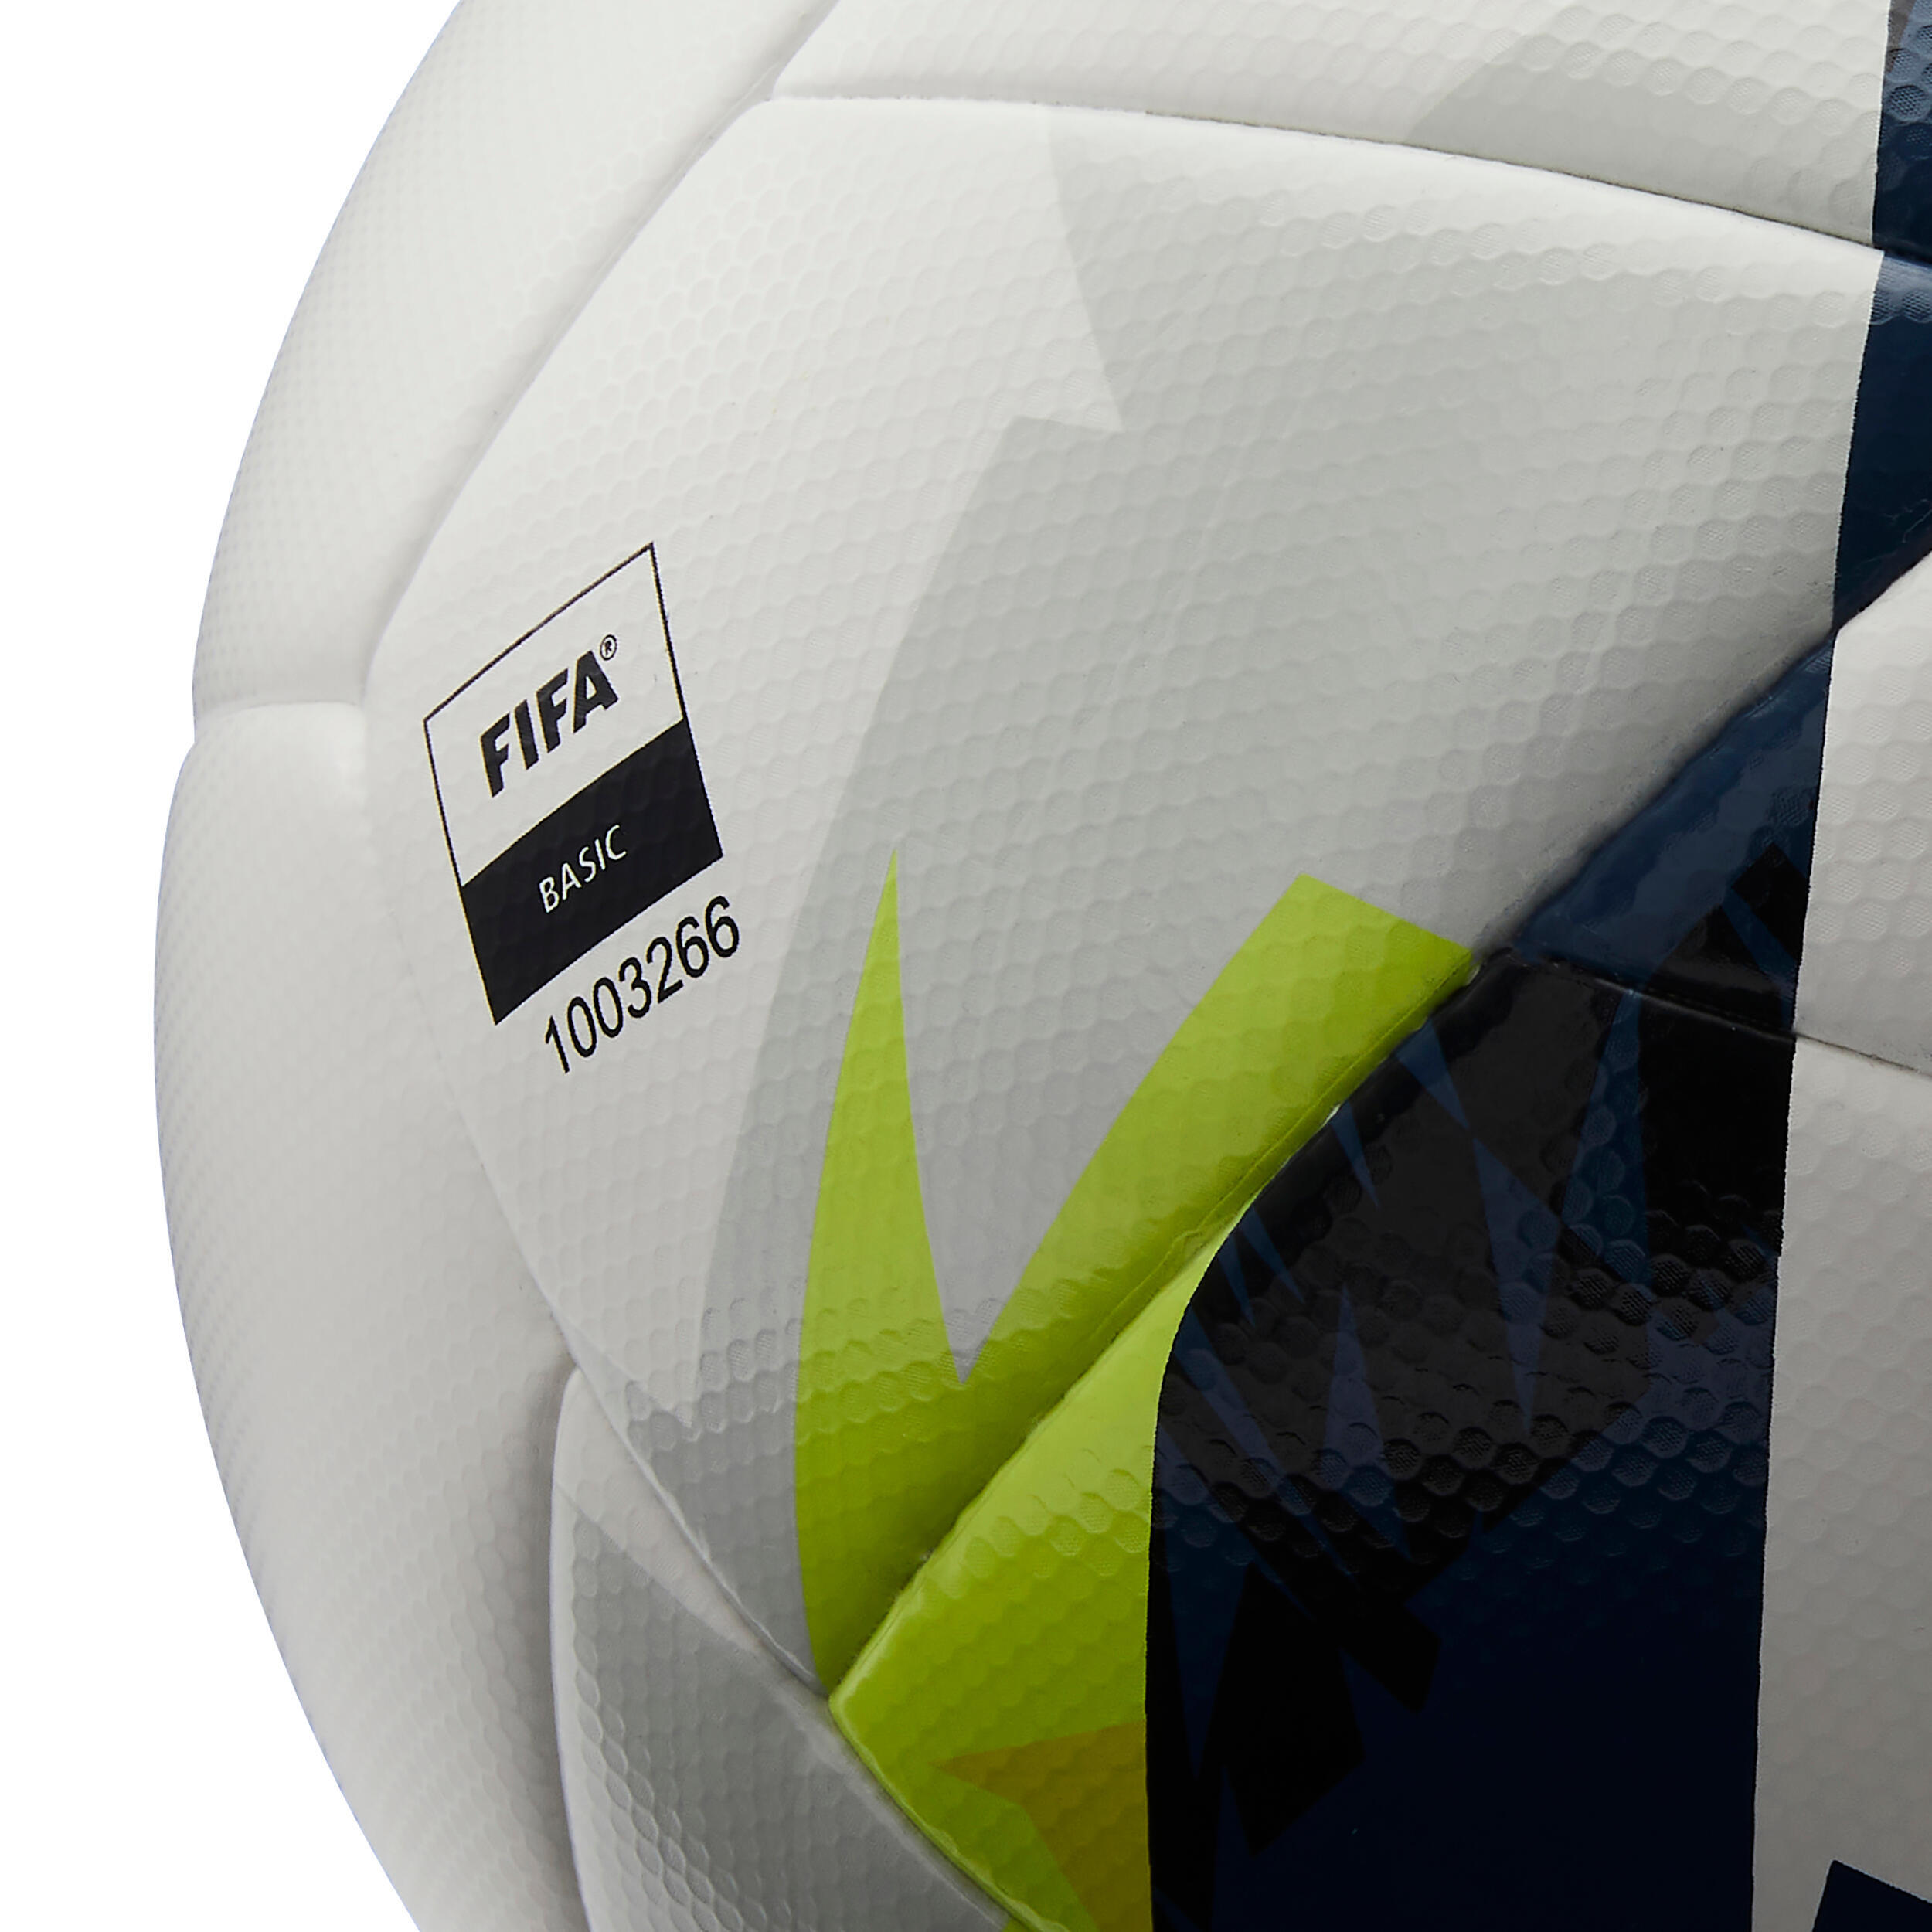 Hybrid Football FIFA Basic F550 Size 5 - White/Yellow 4/7